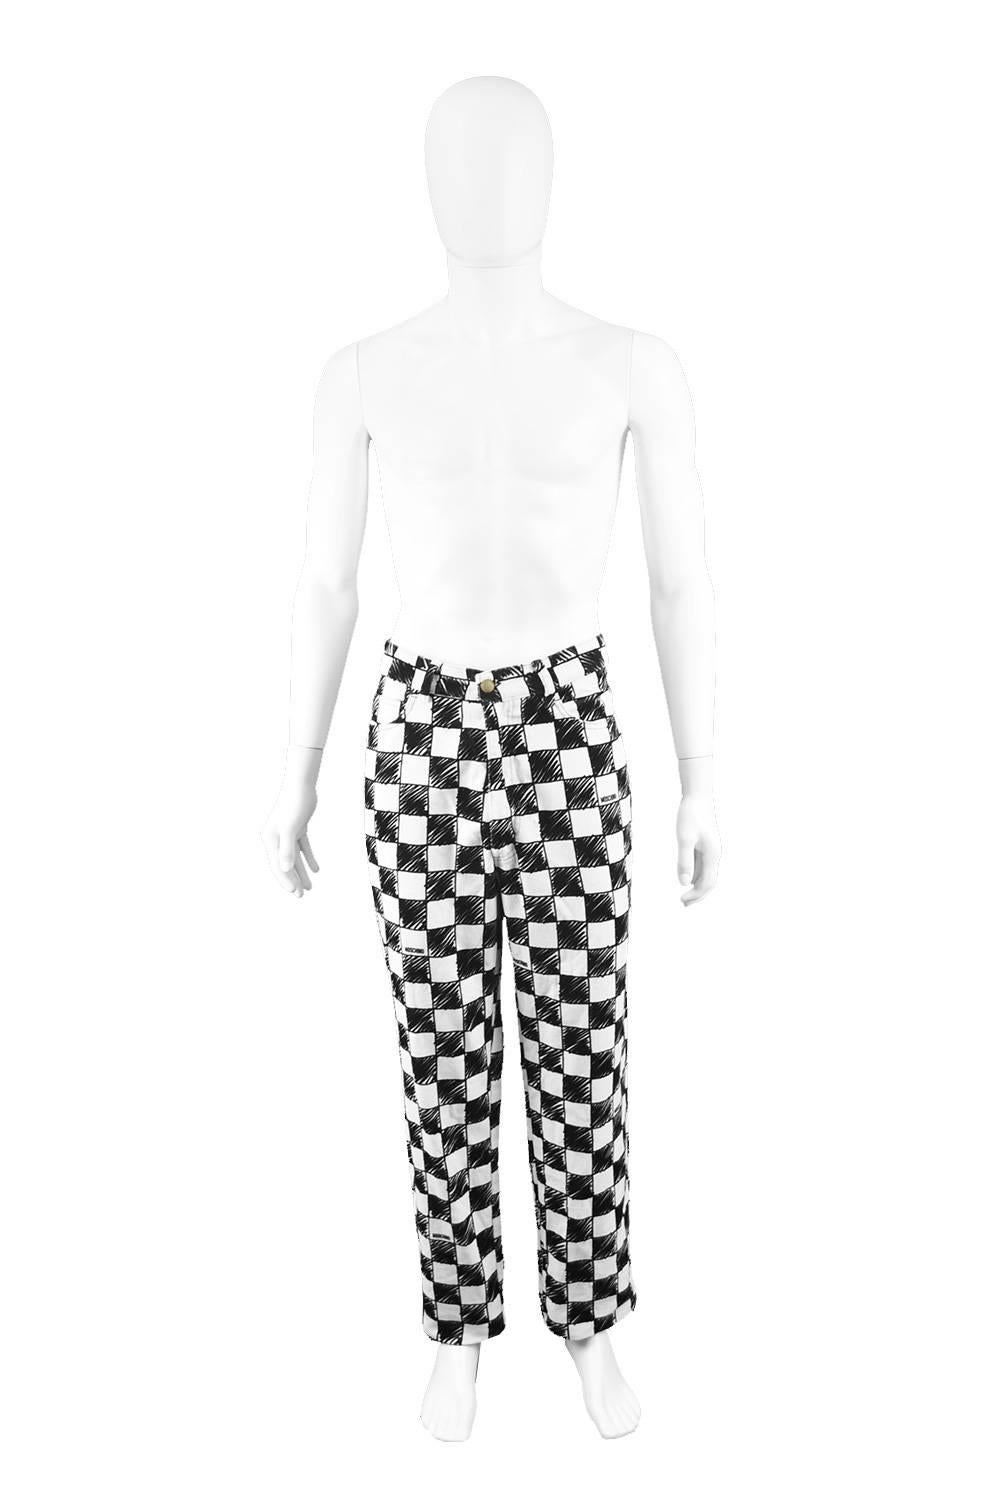 Moschino Men's Vintage 1990's Black & White Velvet Checkerboard Print Pants

Size: Marked EU 54 which is roughly a men's Large to XL. Please check measurements. 
Waist - 36” / 91cm
Rise - 13” / 33cm
Inside Leg  34” / 86cm

Condition: Excellent